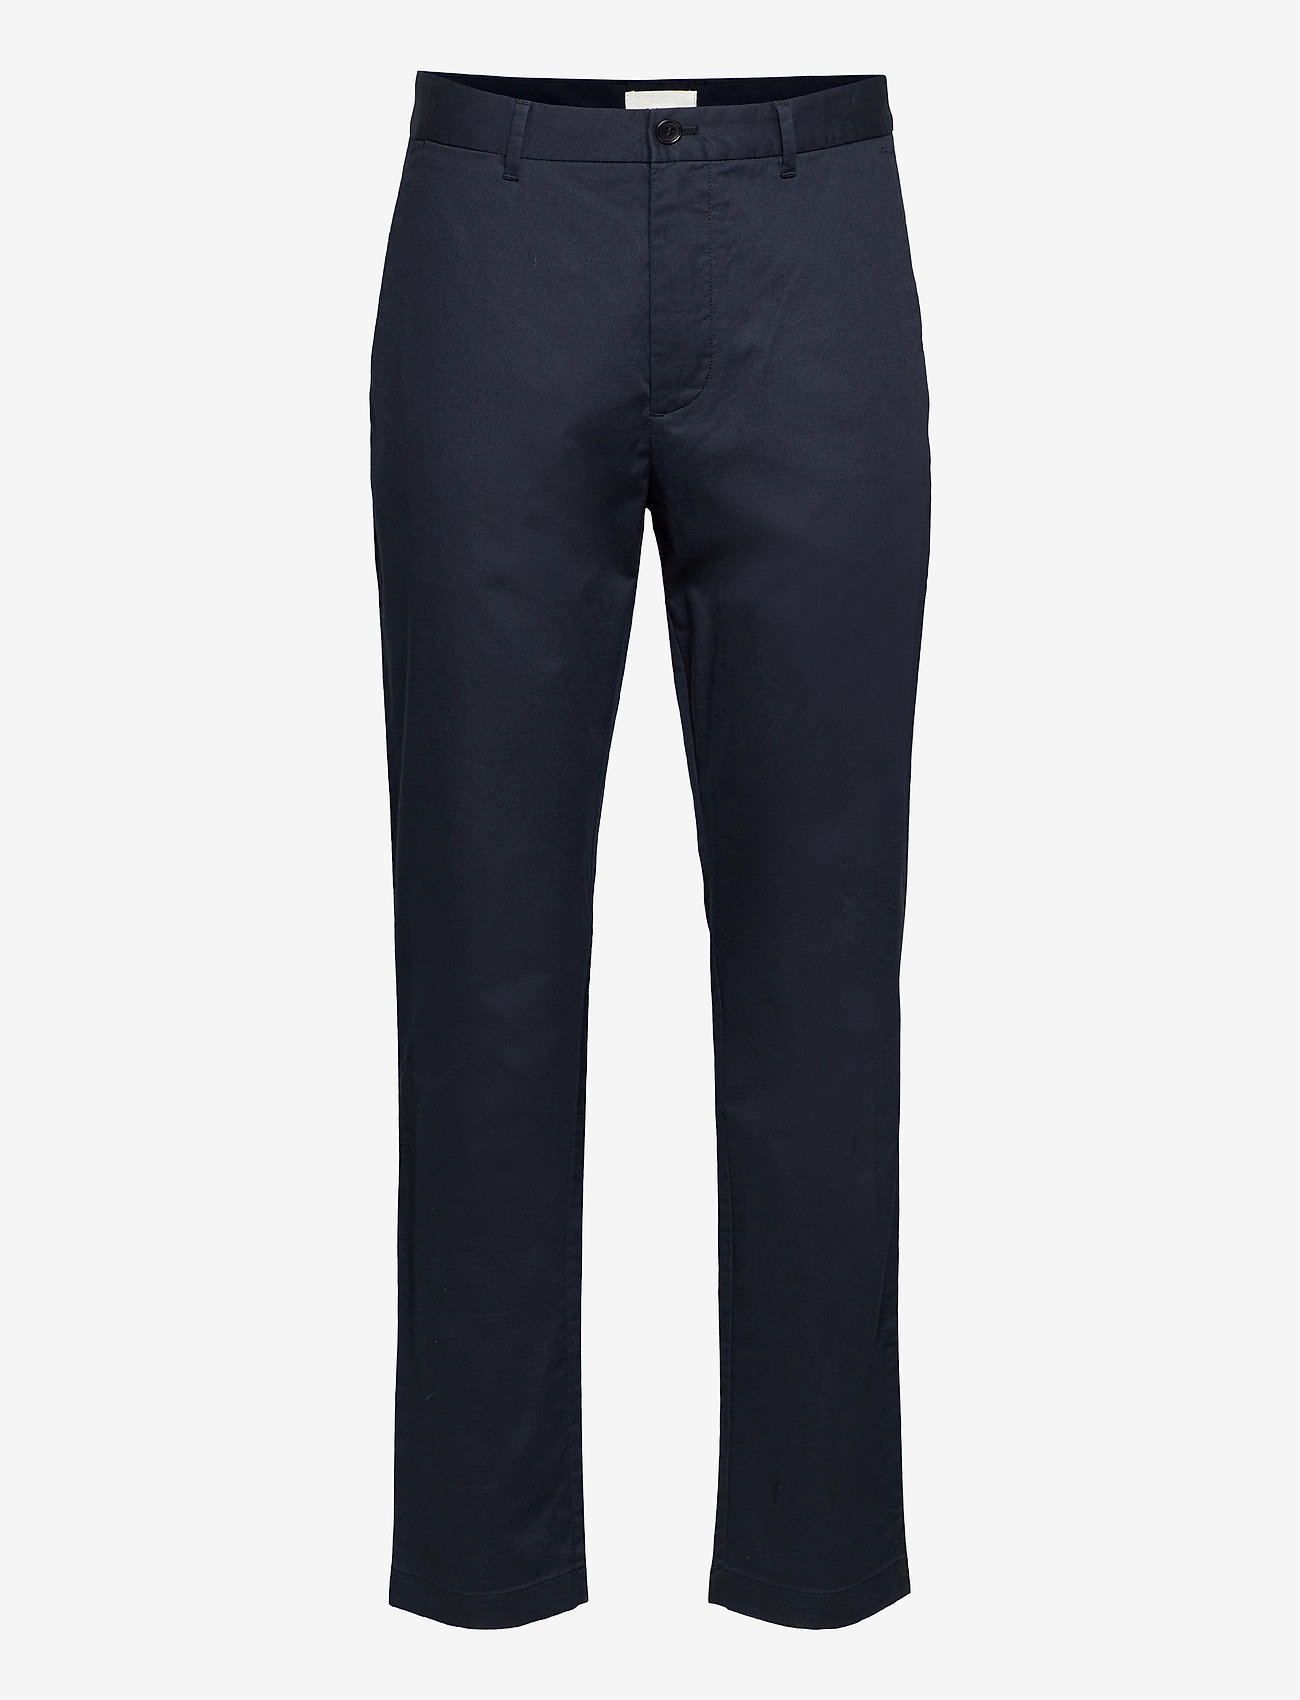 Wood Wood - Marcus light twill trousers - chemises basiques - navy - 0